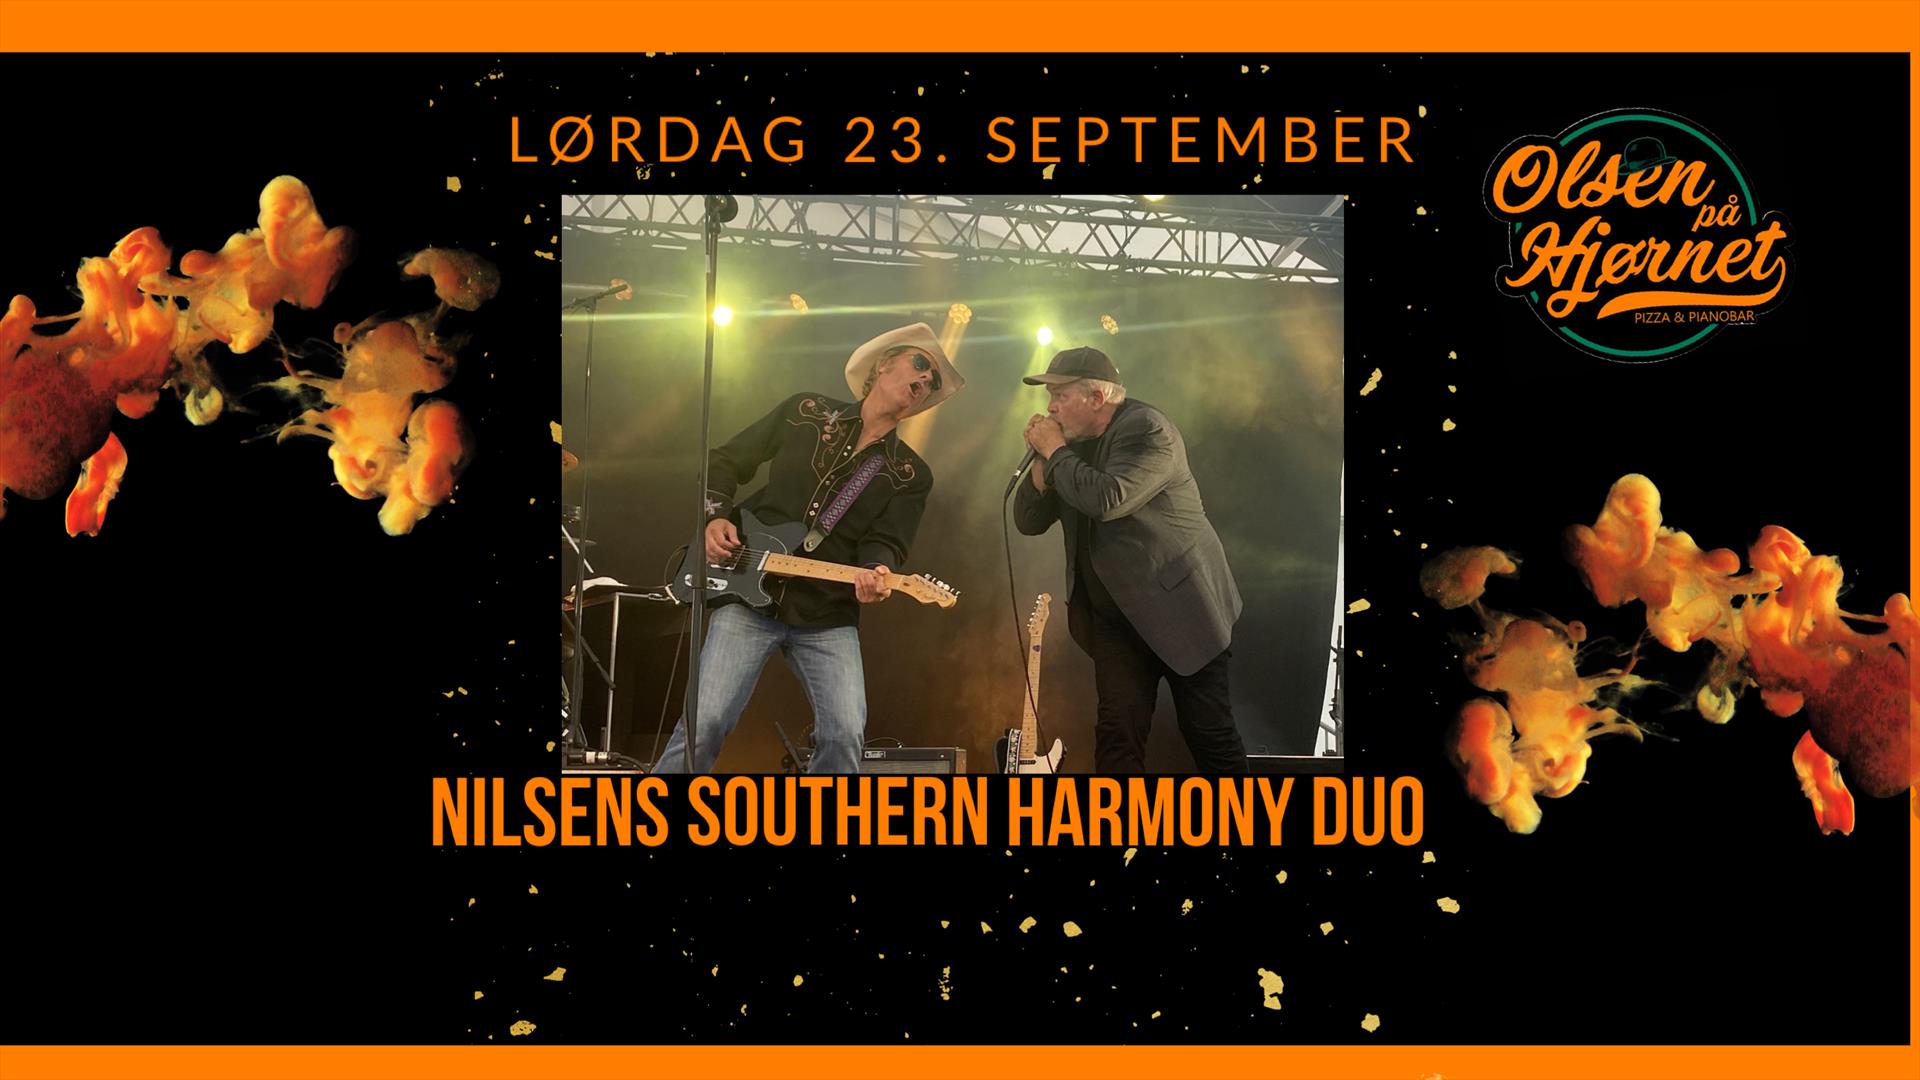 Nilsens Southern Harmony duo